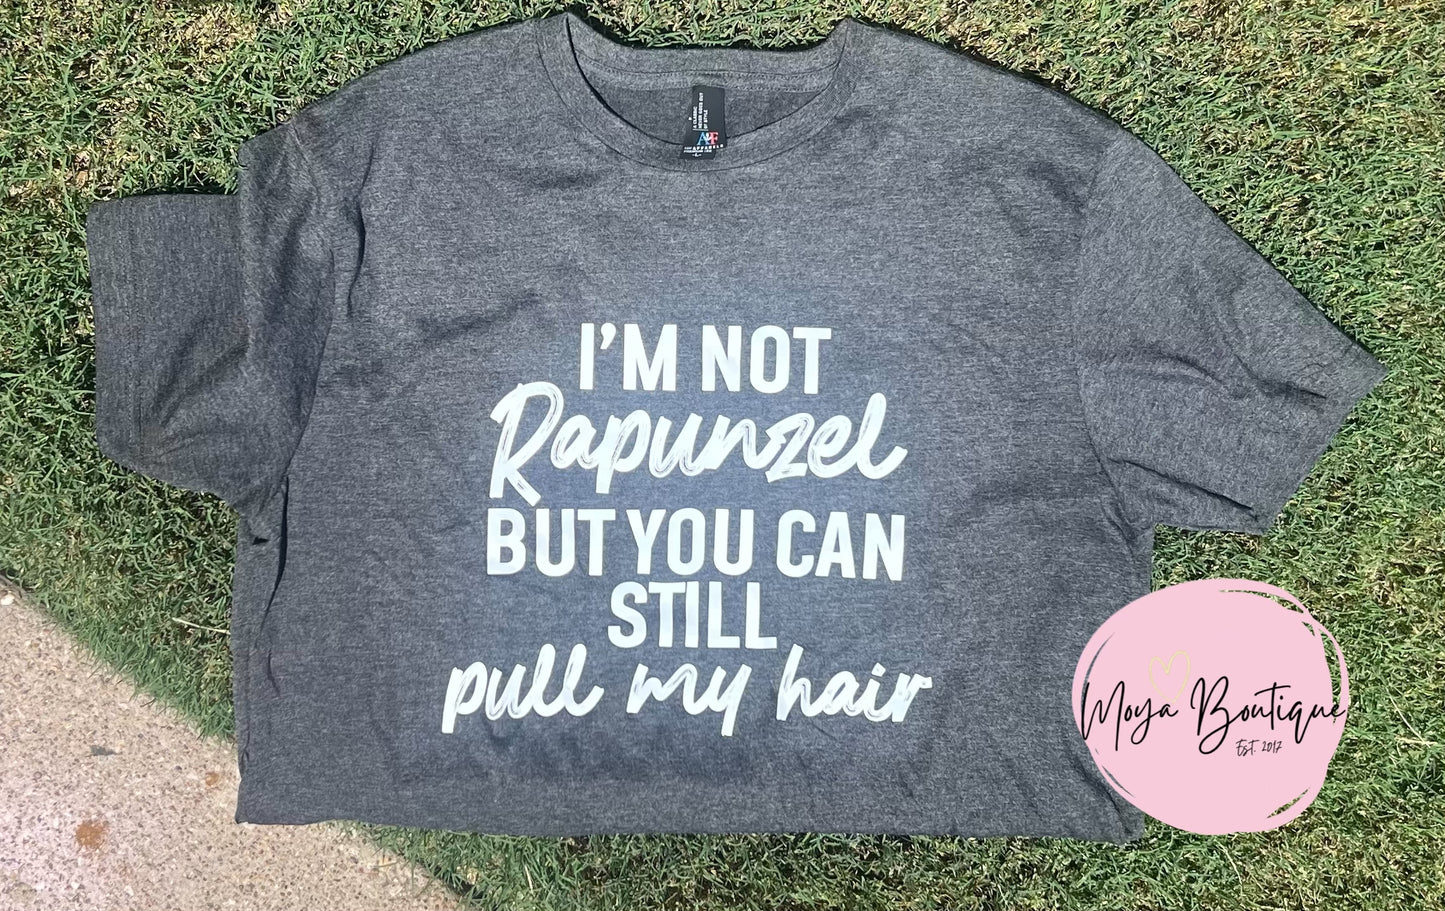 Rapunzel - Pull my hair